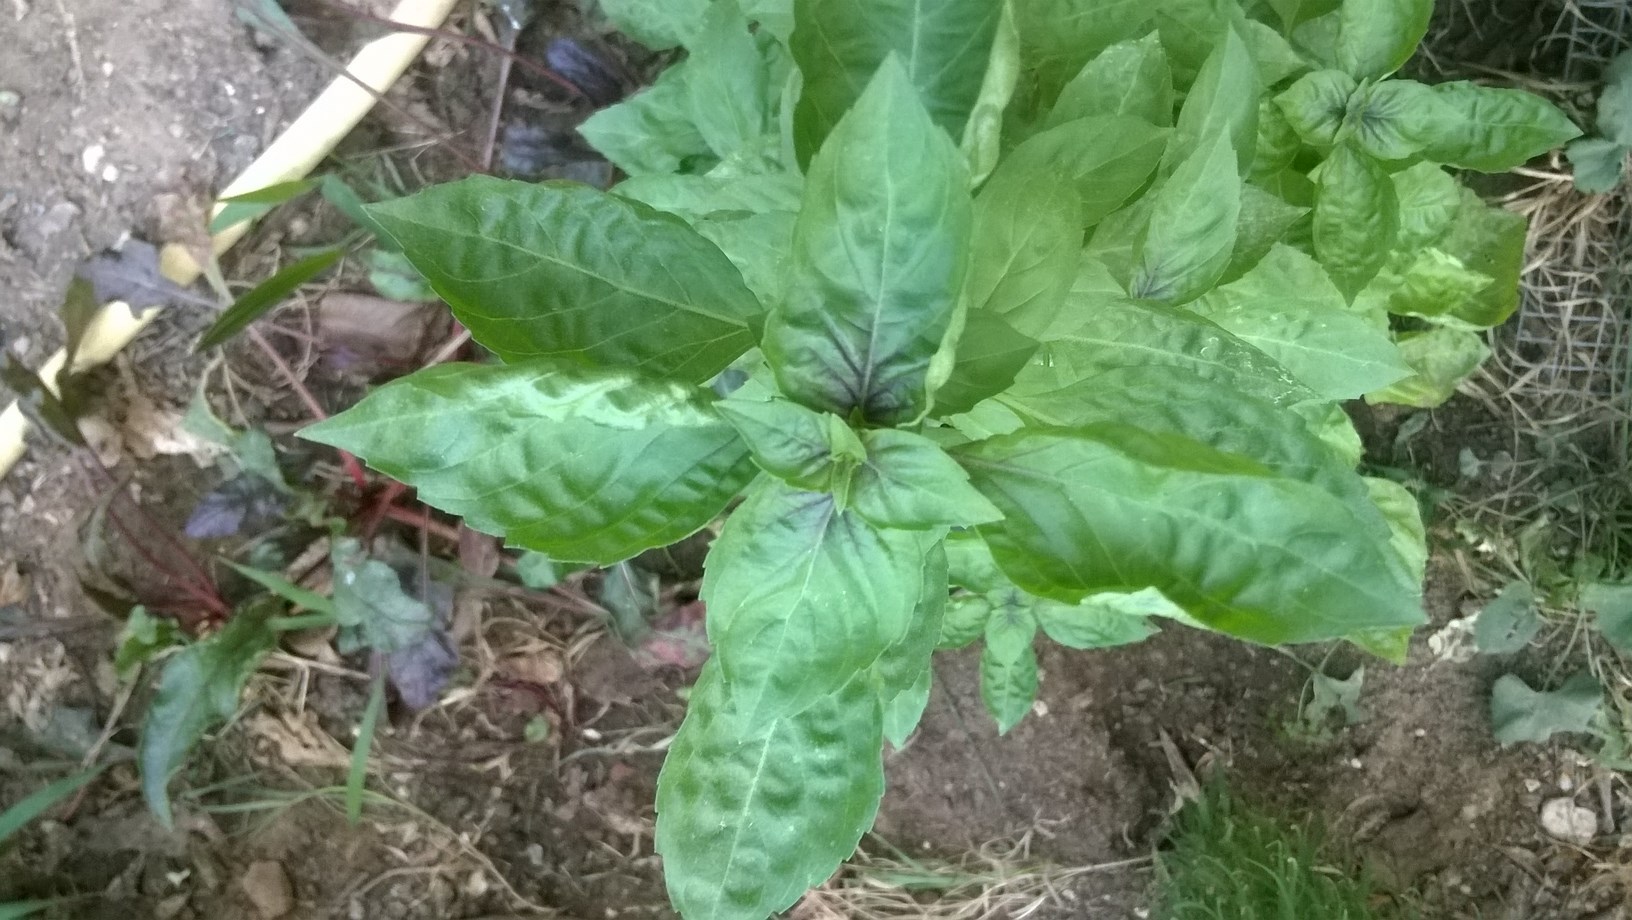 basil is growing well in my garden